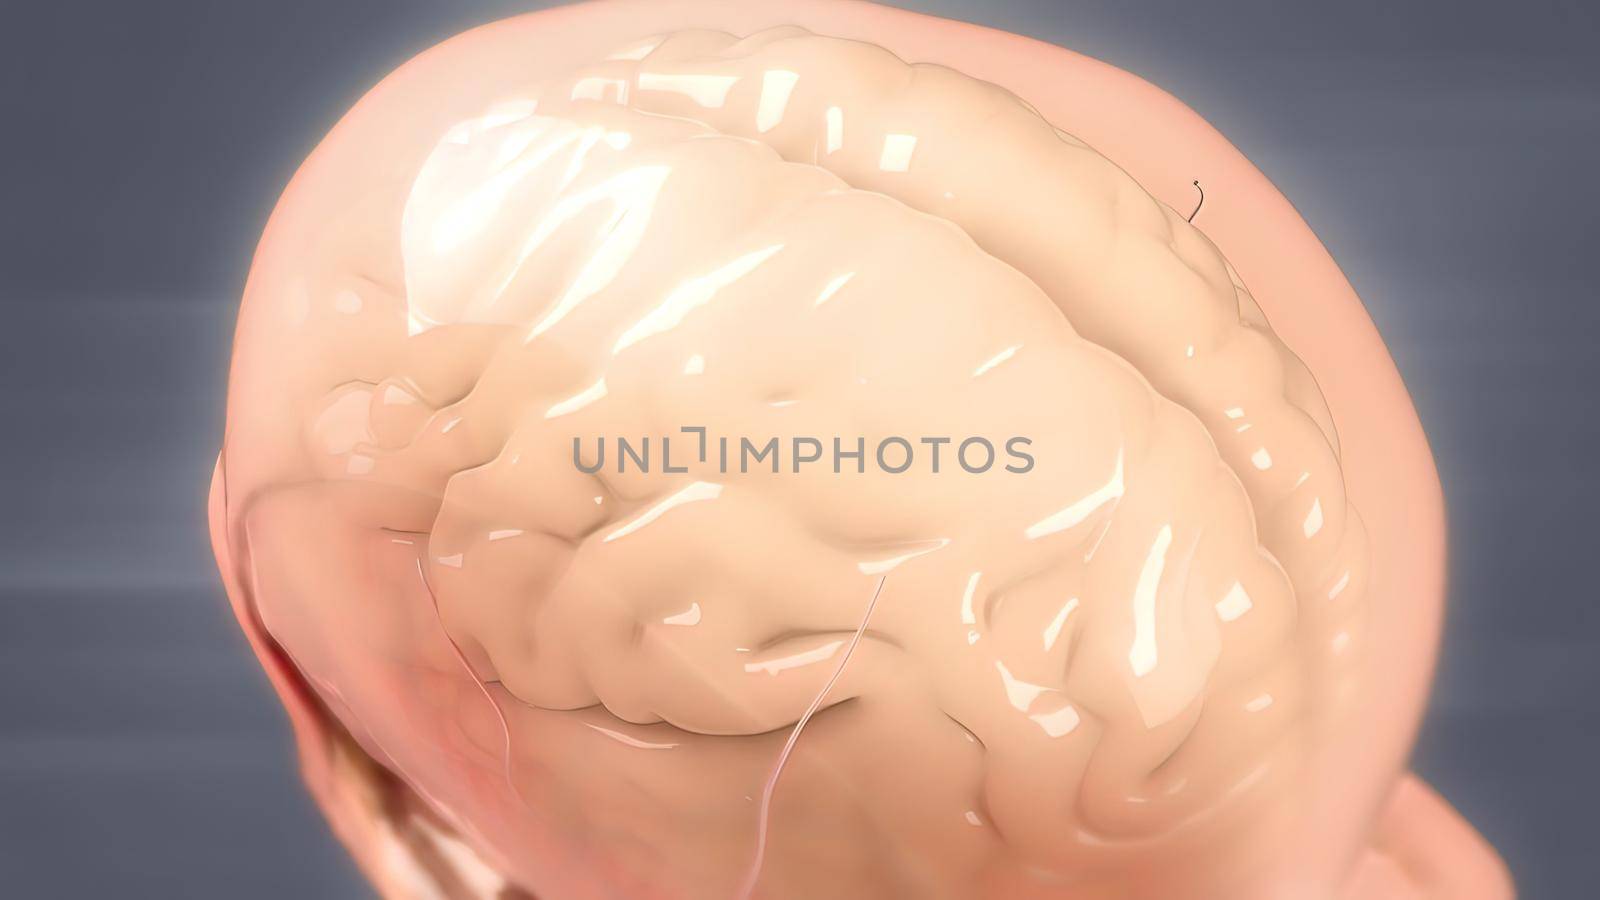 Human brain Anatomical Model 3D illustration